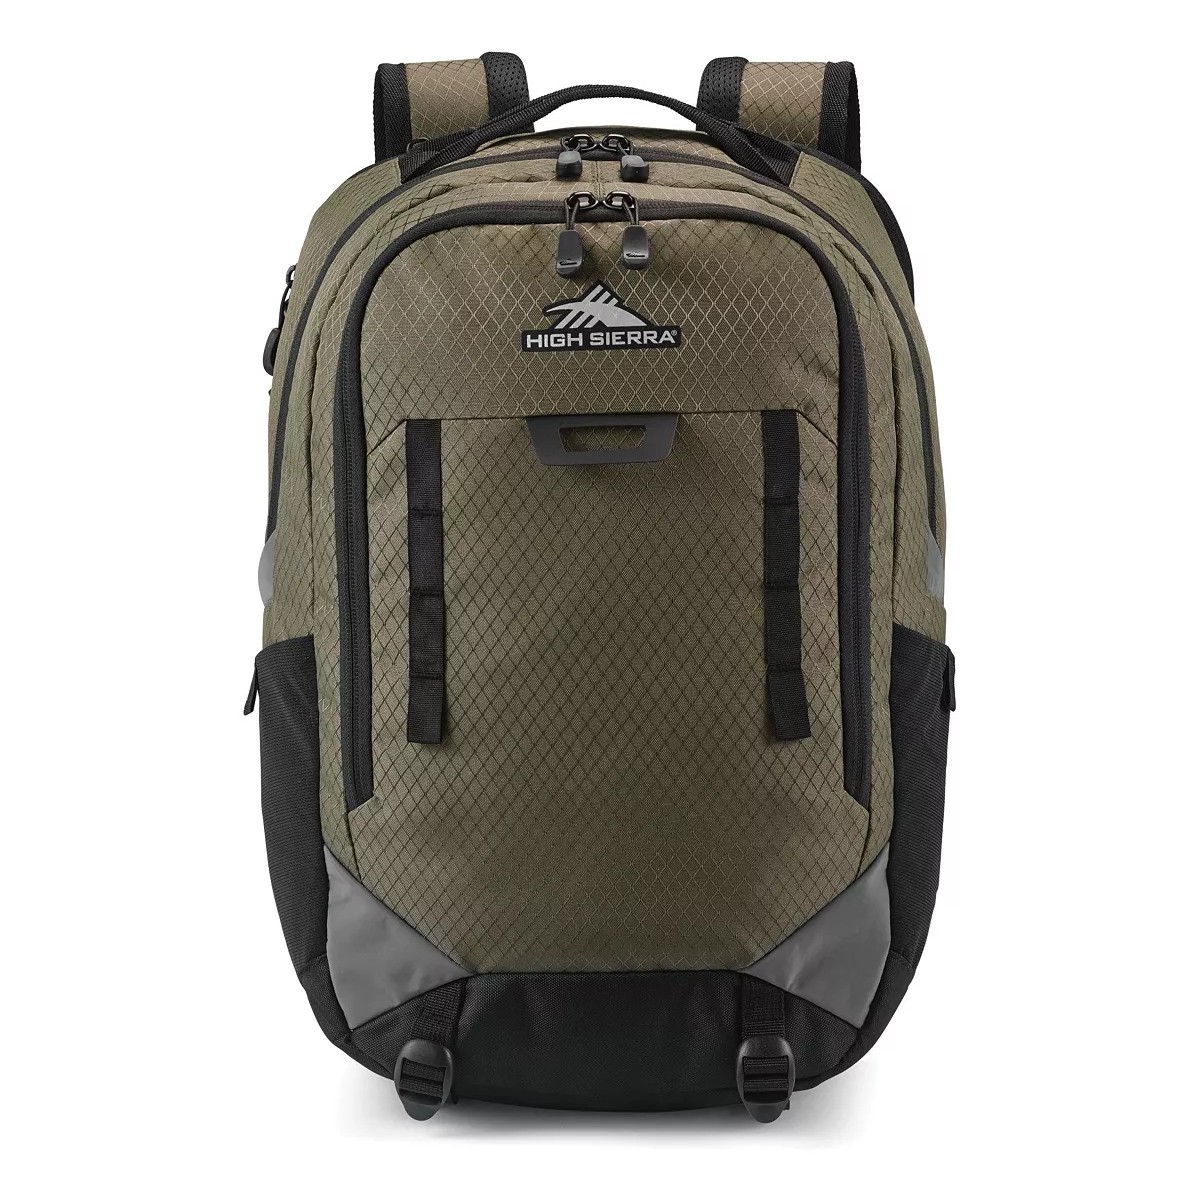 Рюкзак High Sierra Litmus, темно-зеленый/черный цена и фото